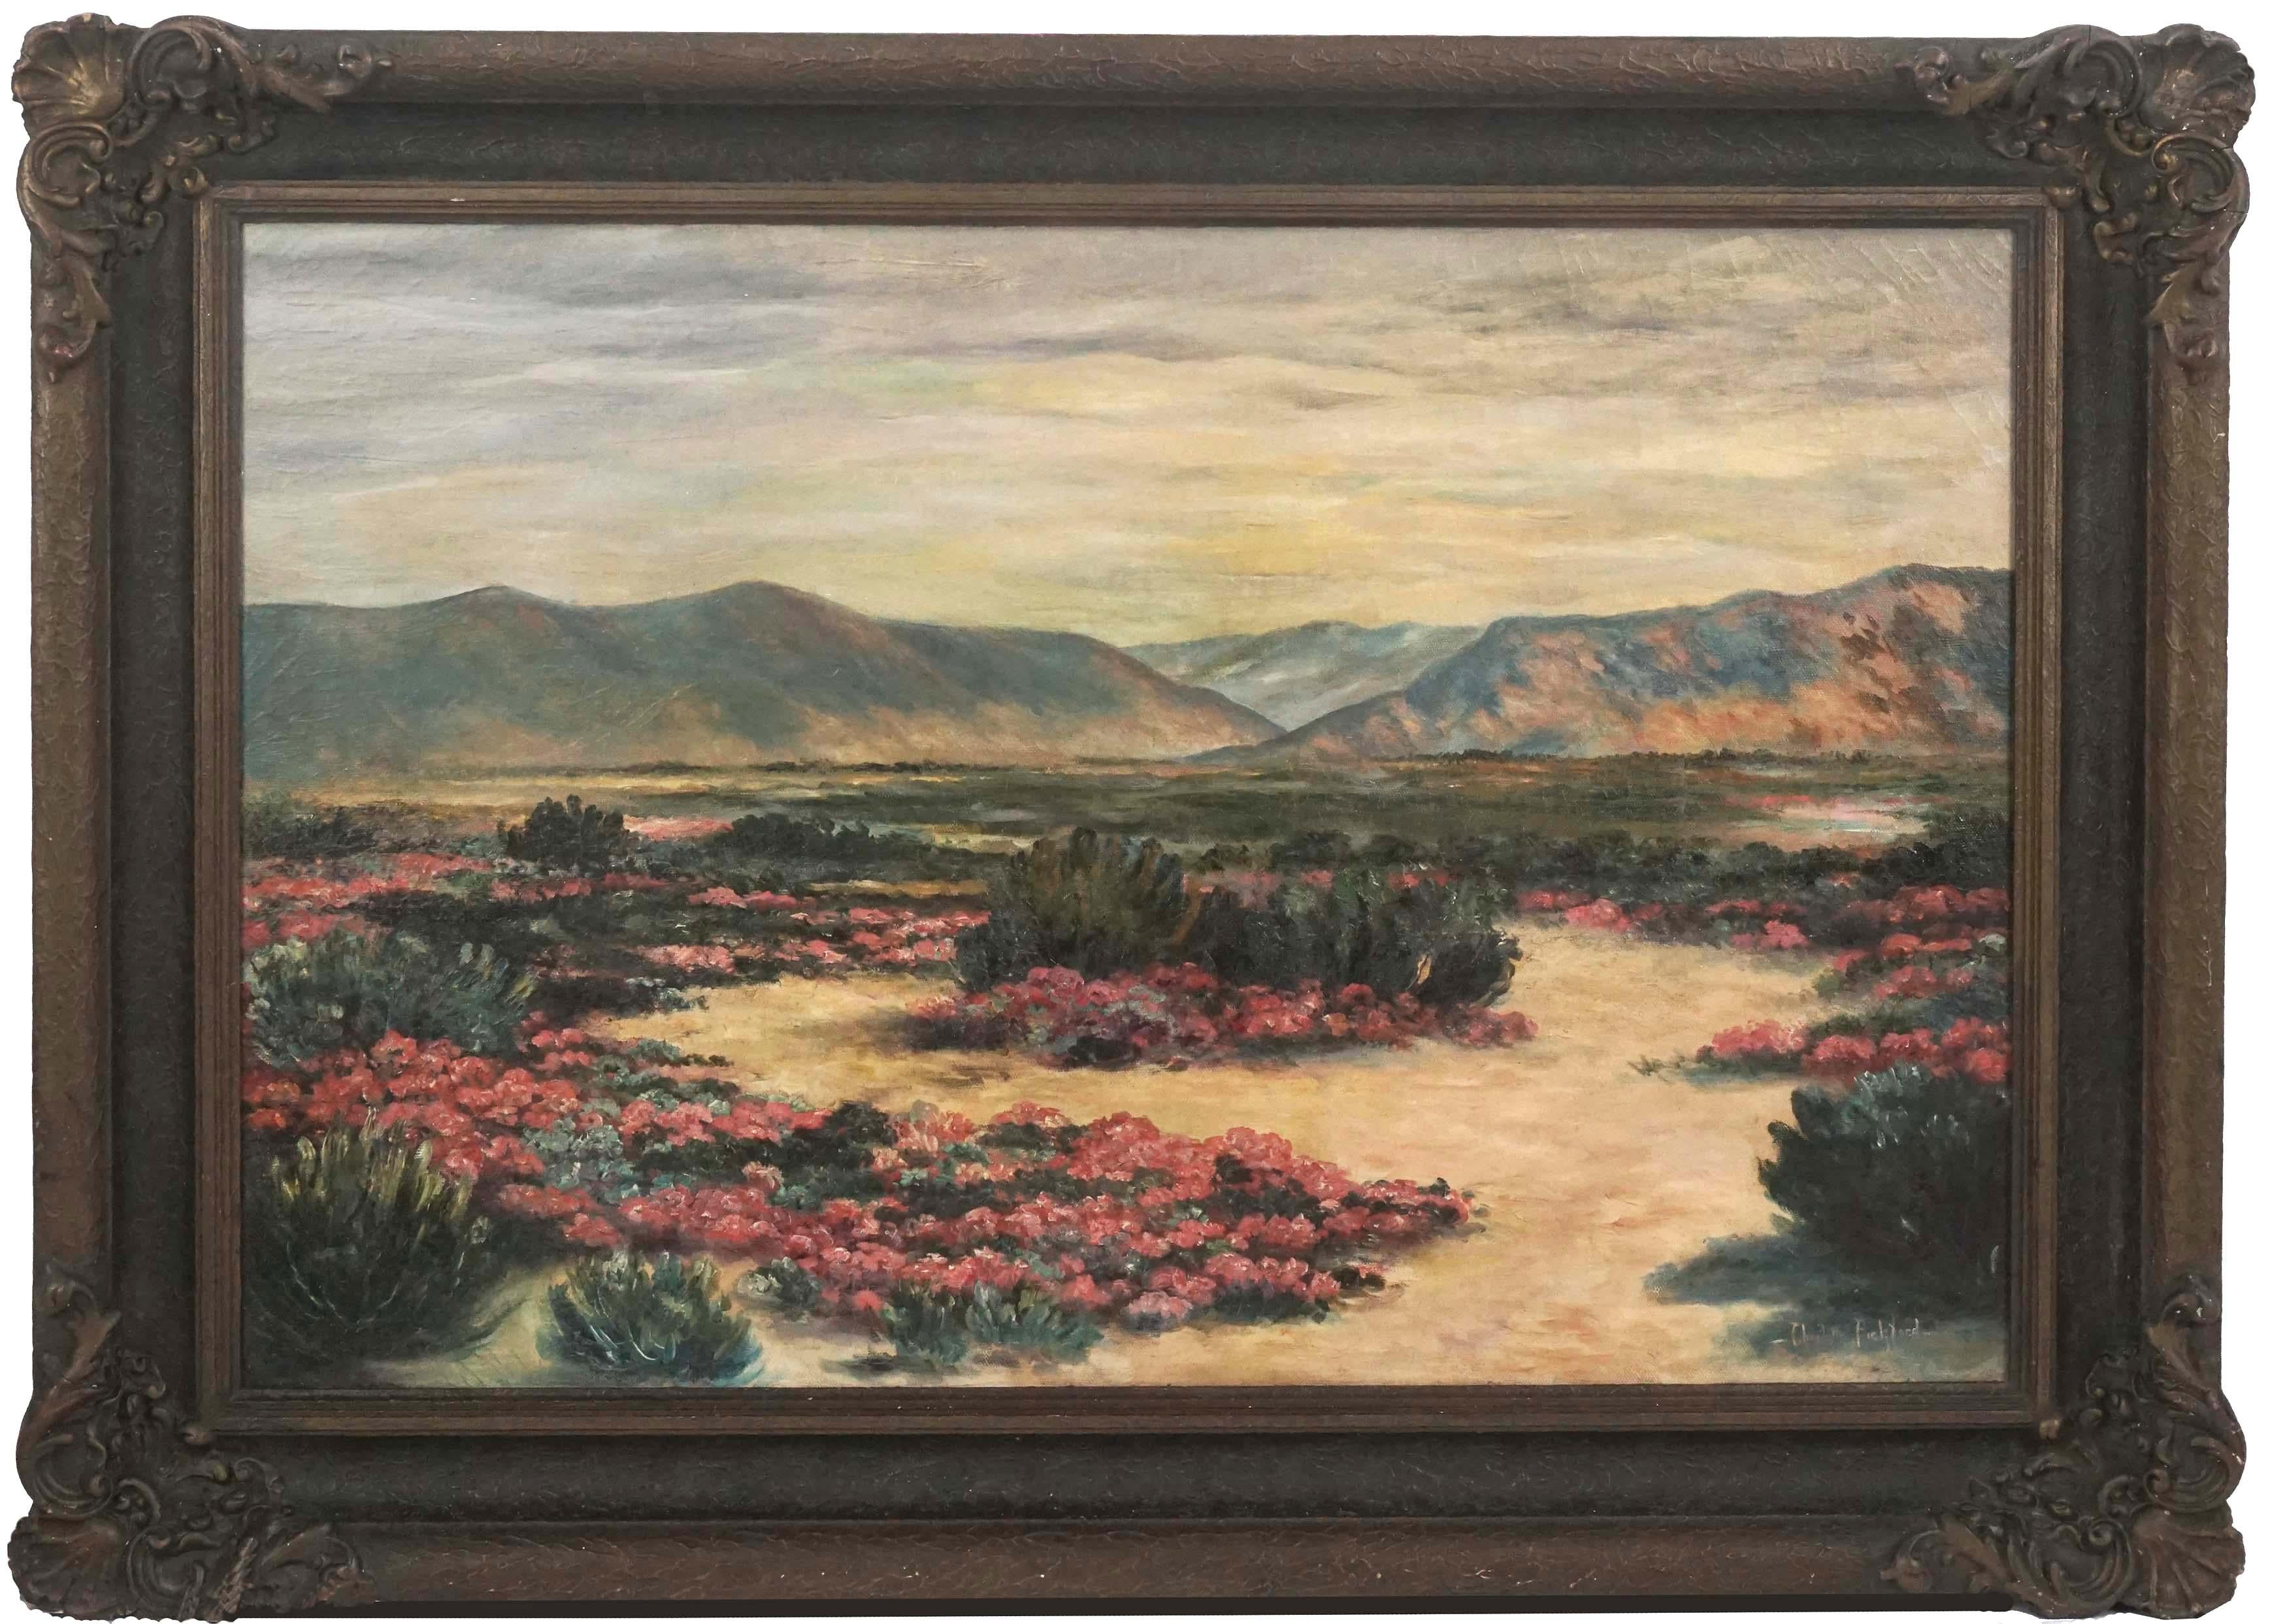 Charlotte Pickford Landscape Painting - Early 20th Century Flowering Palm Springs in Bloom, Superbloom Desert Landscape 